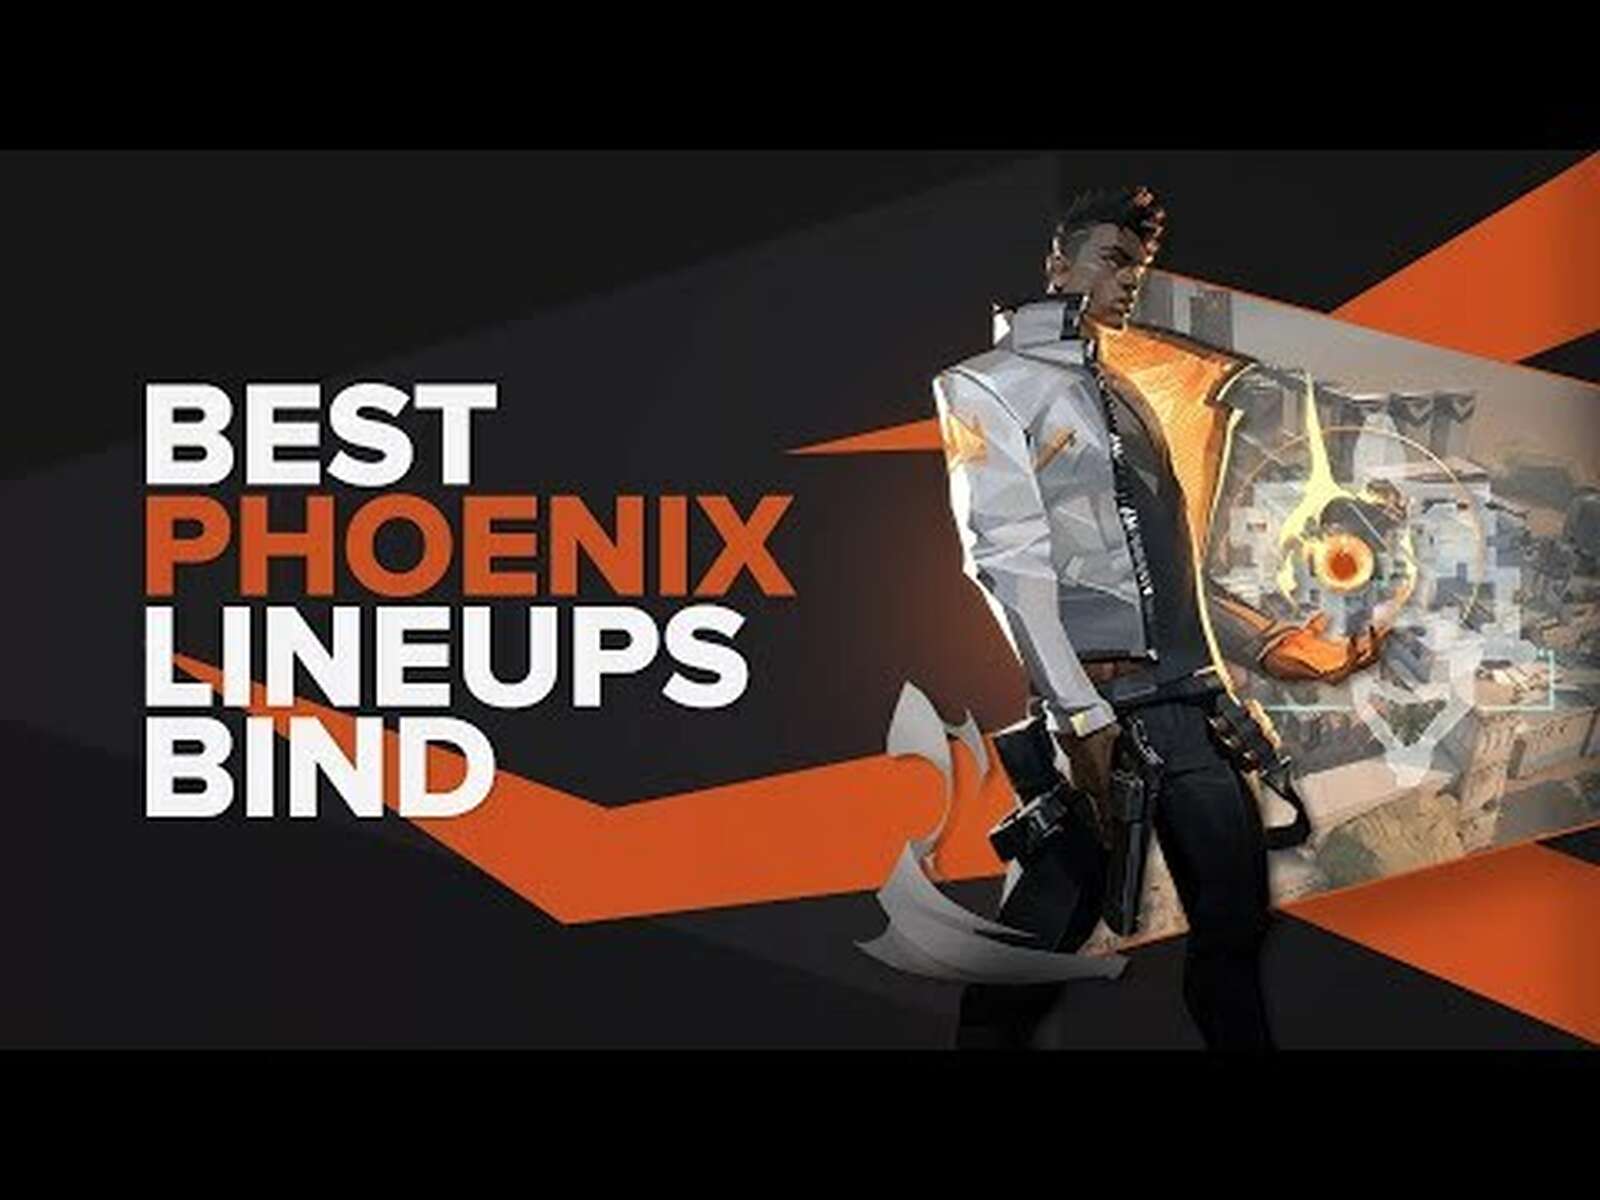 The Best Phoenix Lineups on Bind